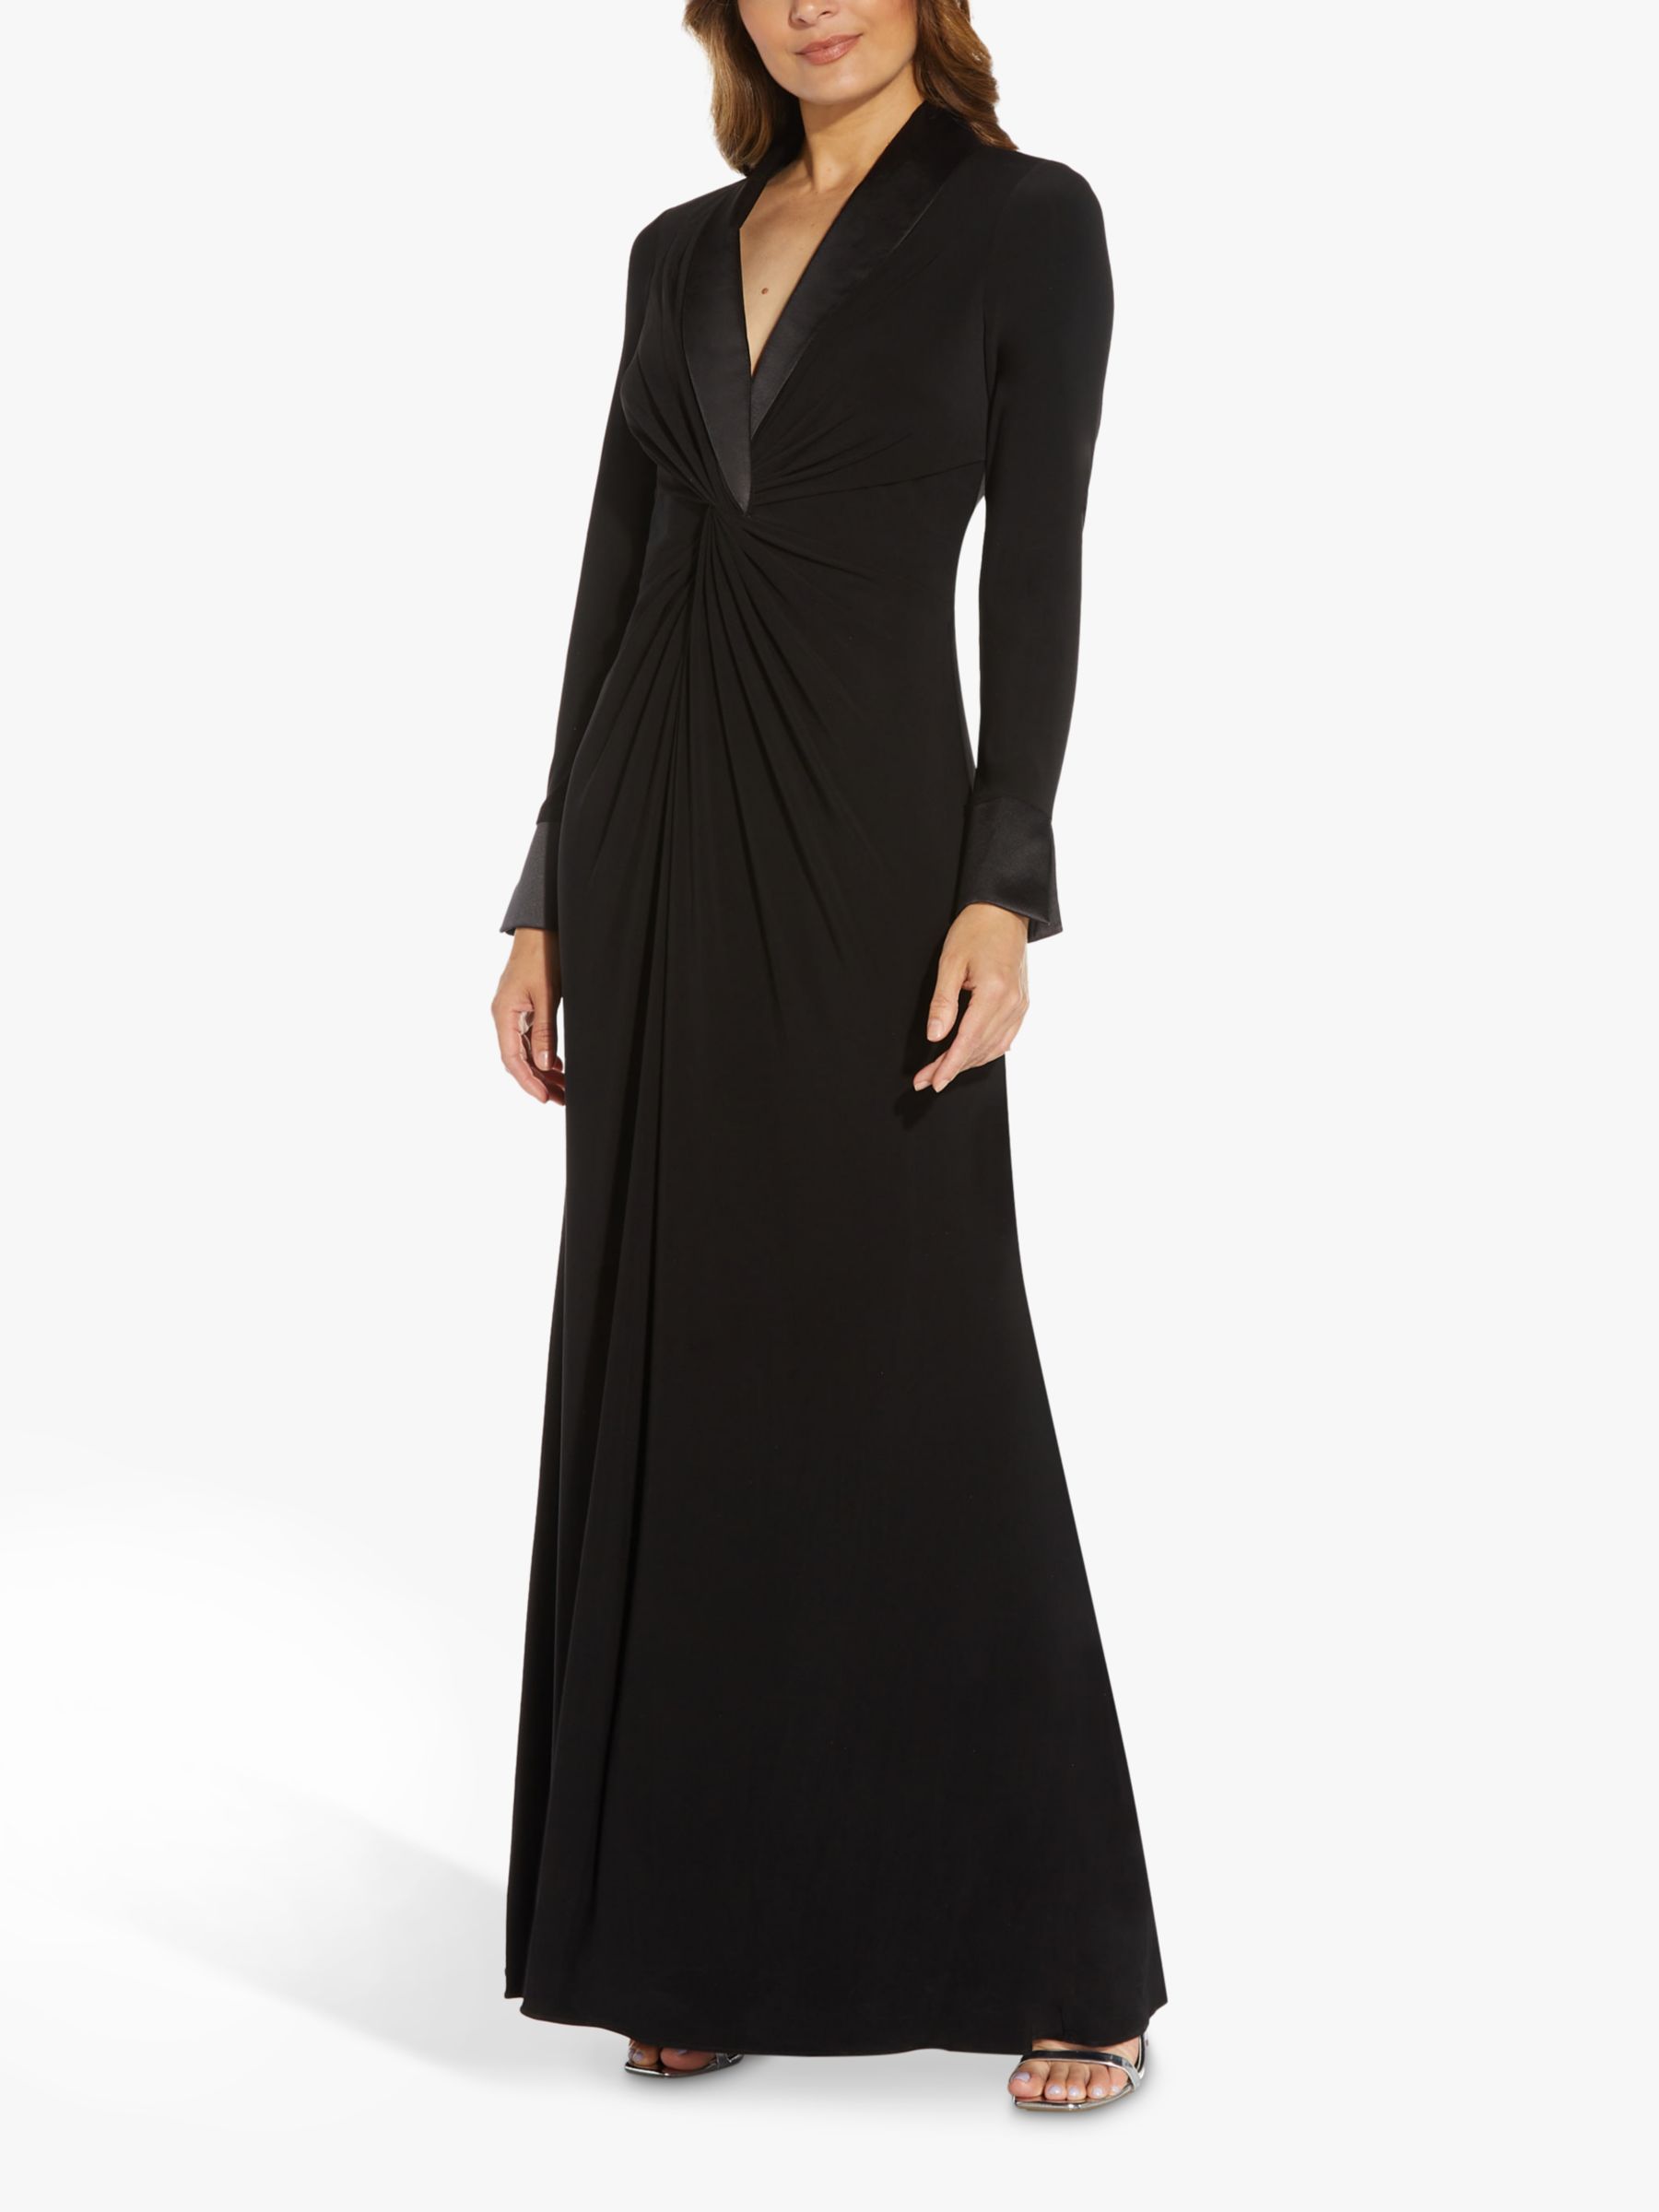 Adrianna Papell Tuxedo Dress, Black at John Lewis & Partners